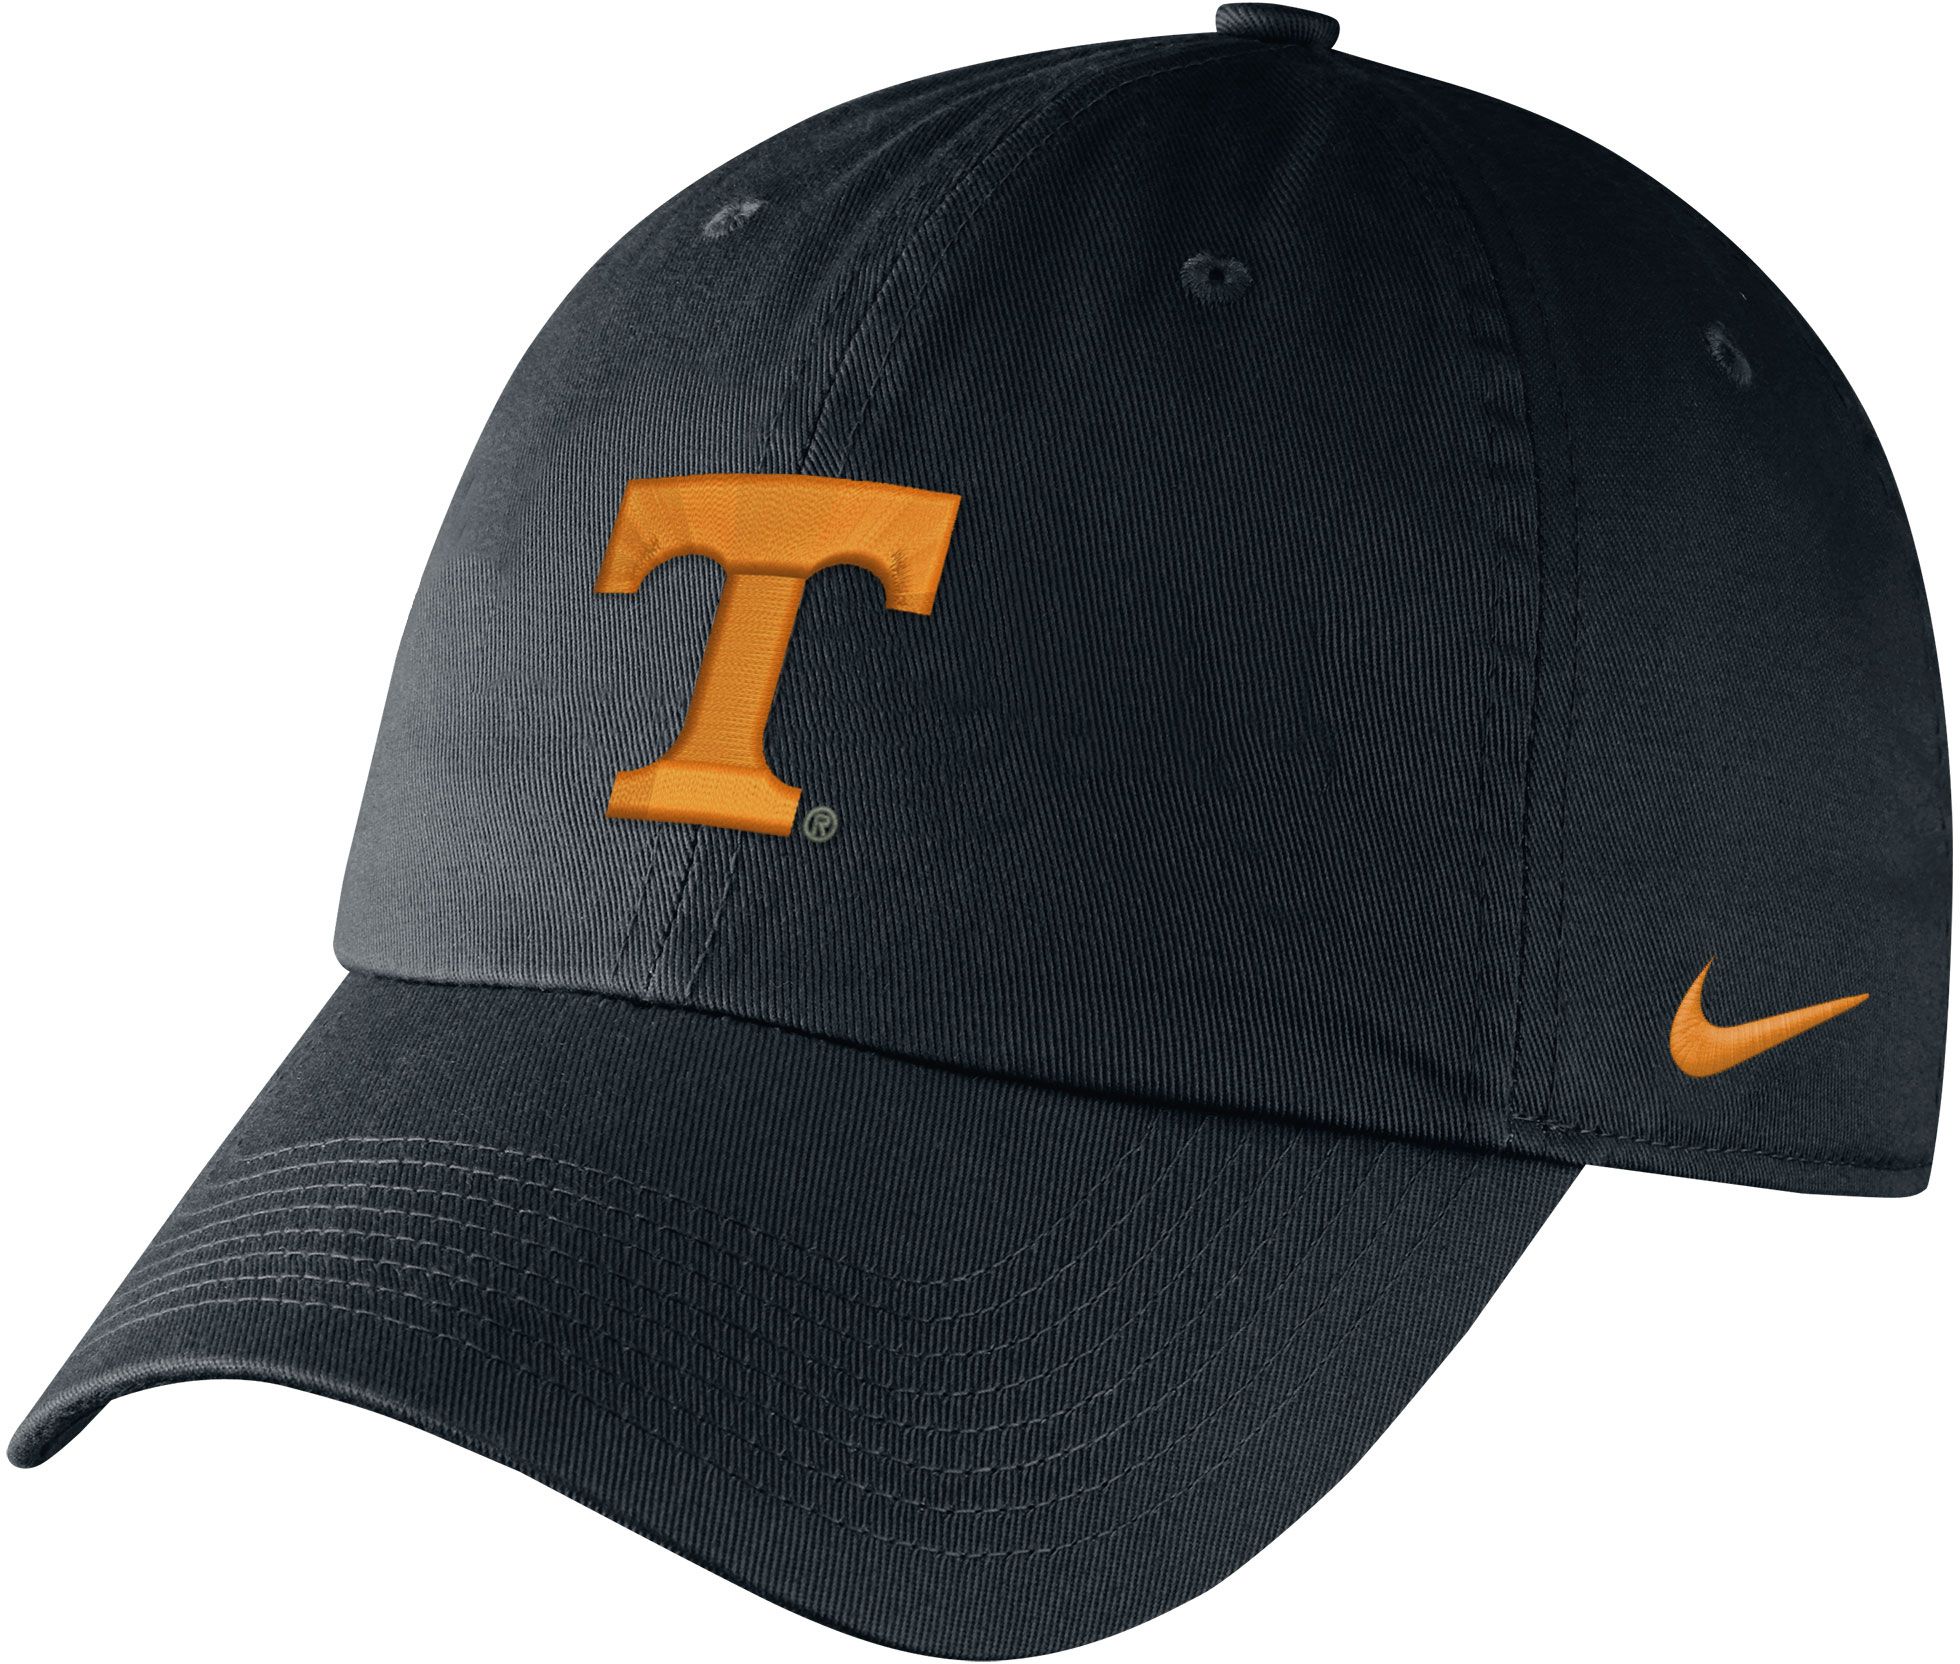 Men's Tennessee Volunteers Campus Adjustable Black Hat